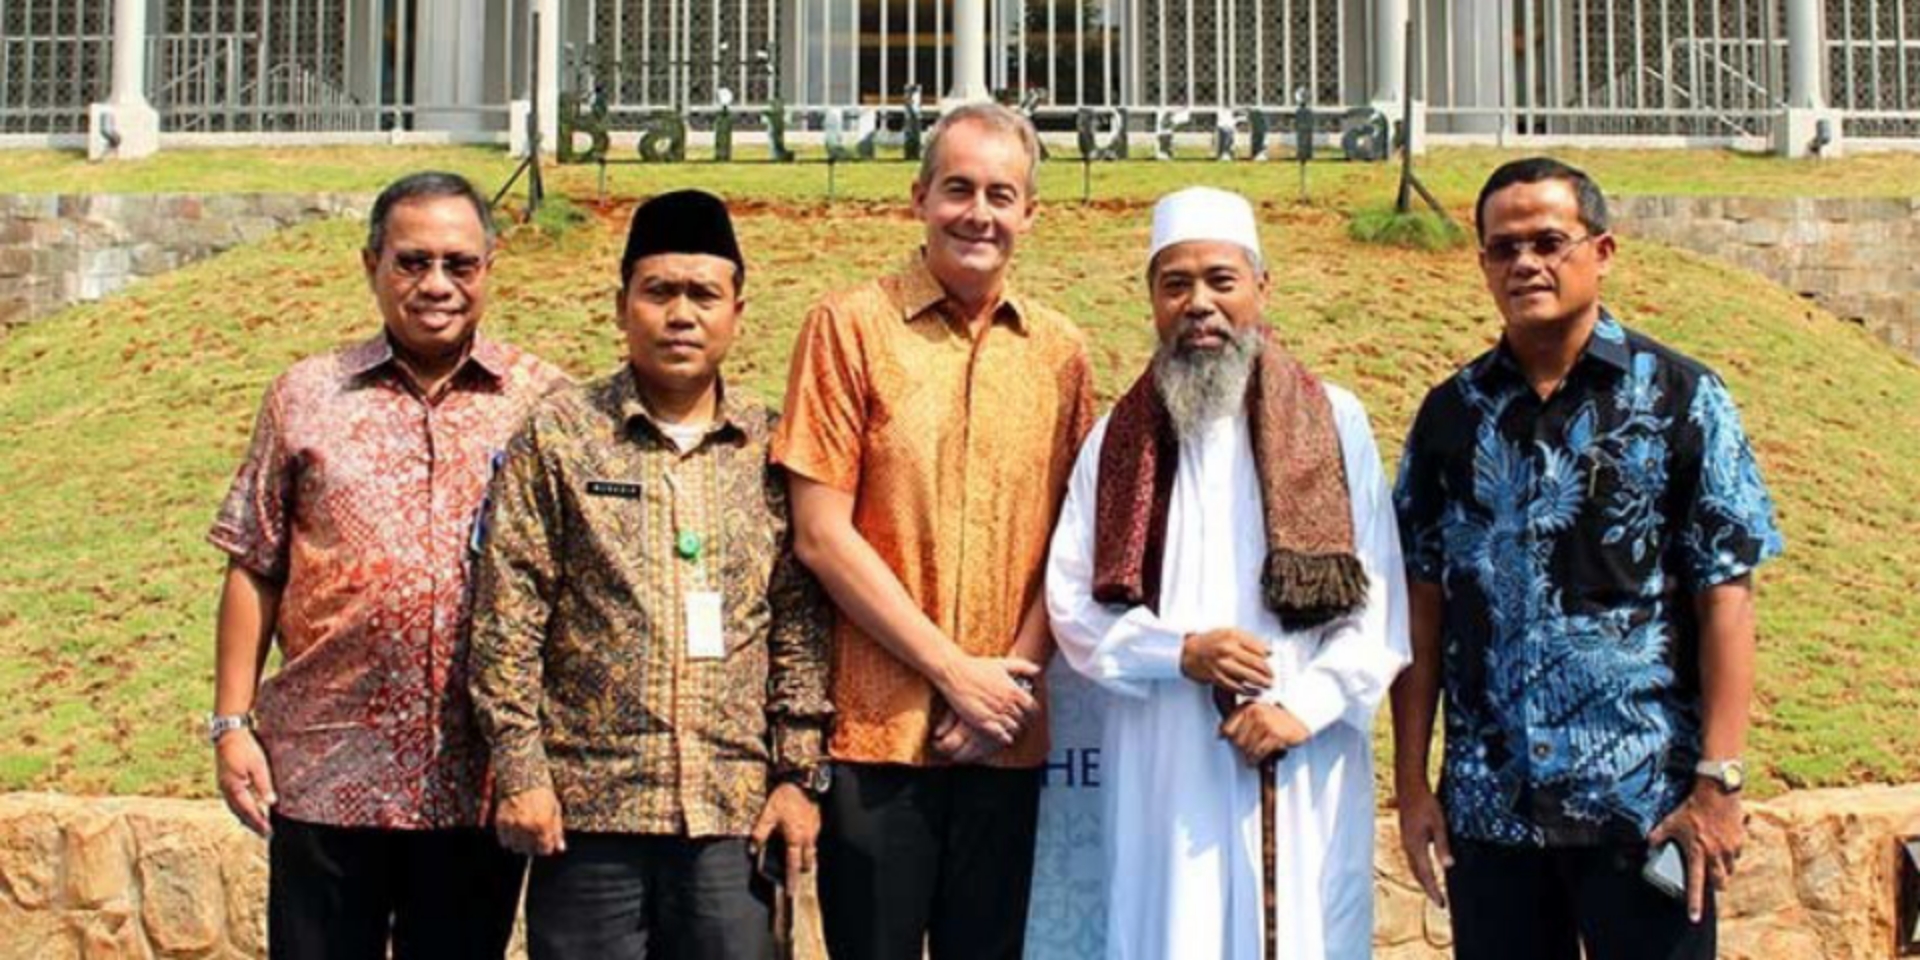 Manajemen Hero Group Resmikan Masjid Baitul Kurnia. l hero.co.id